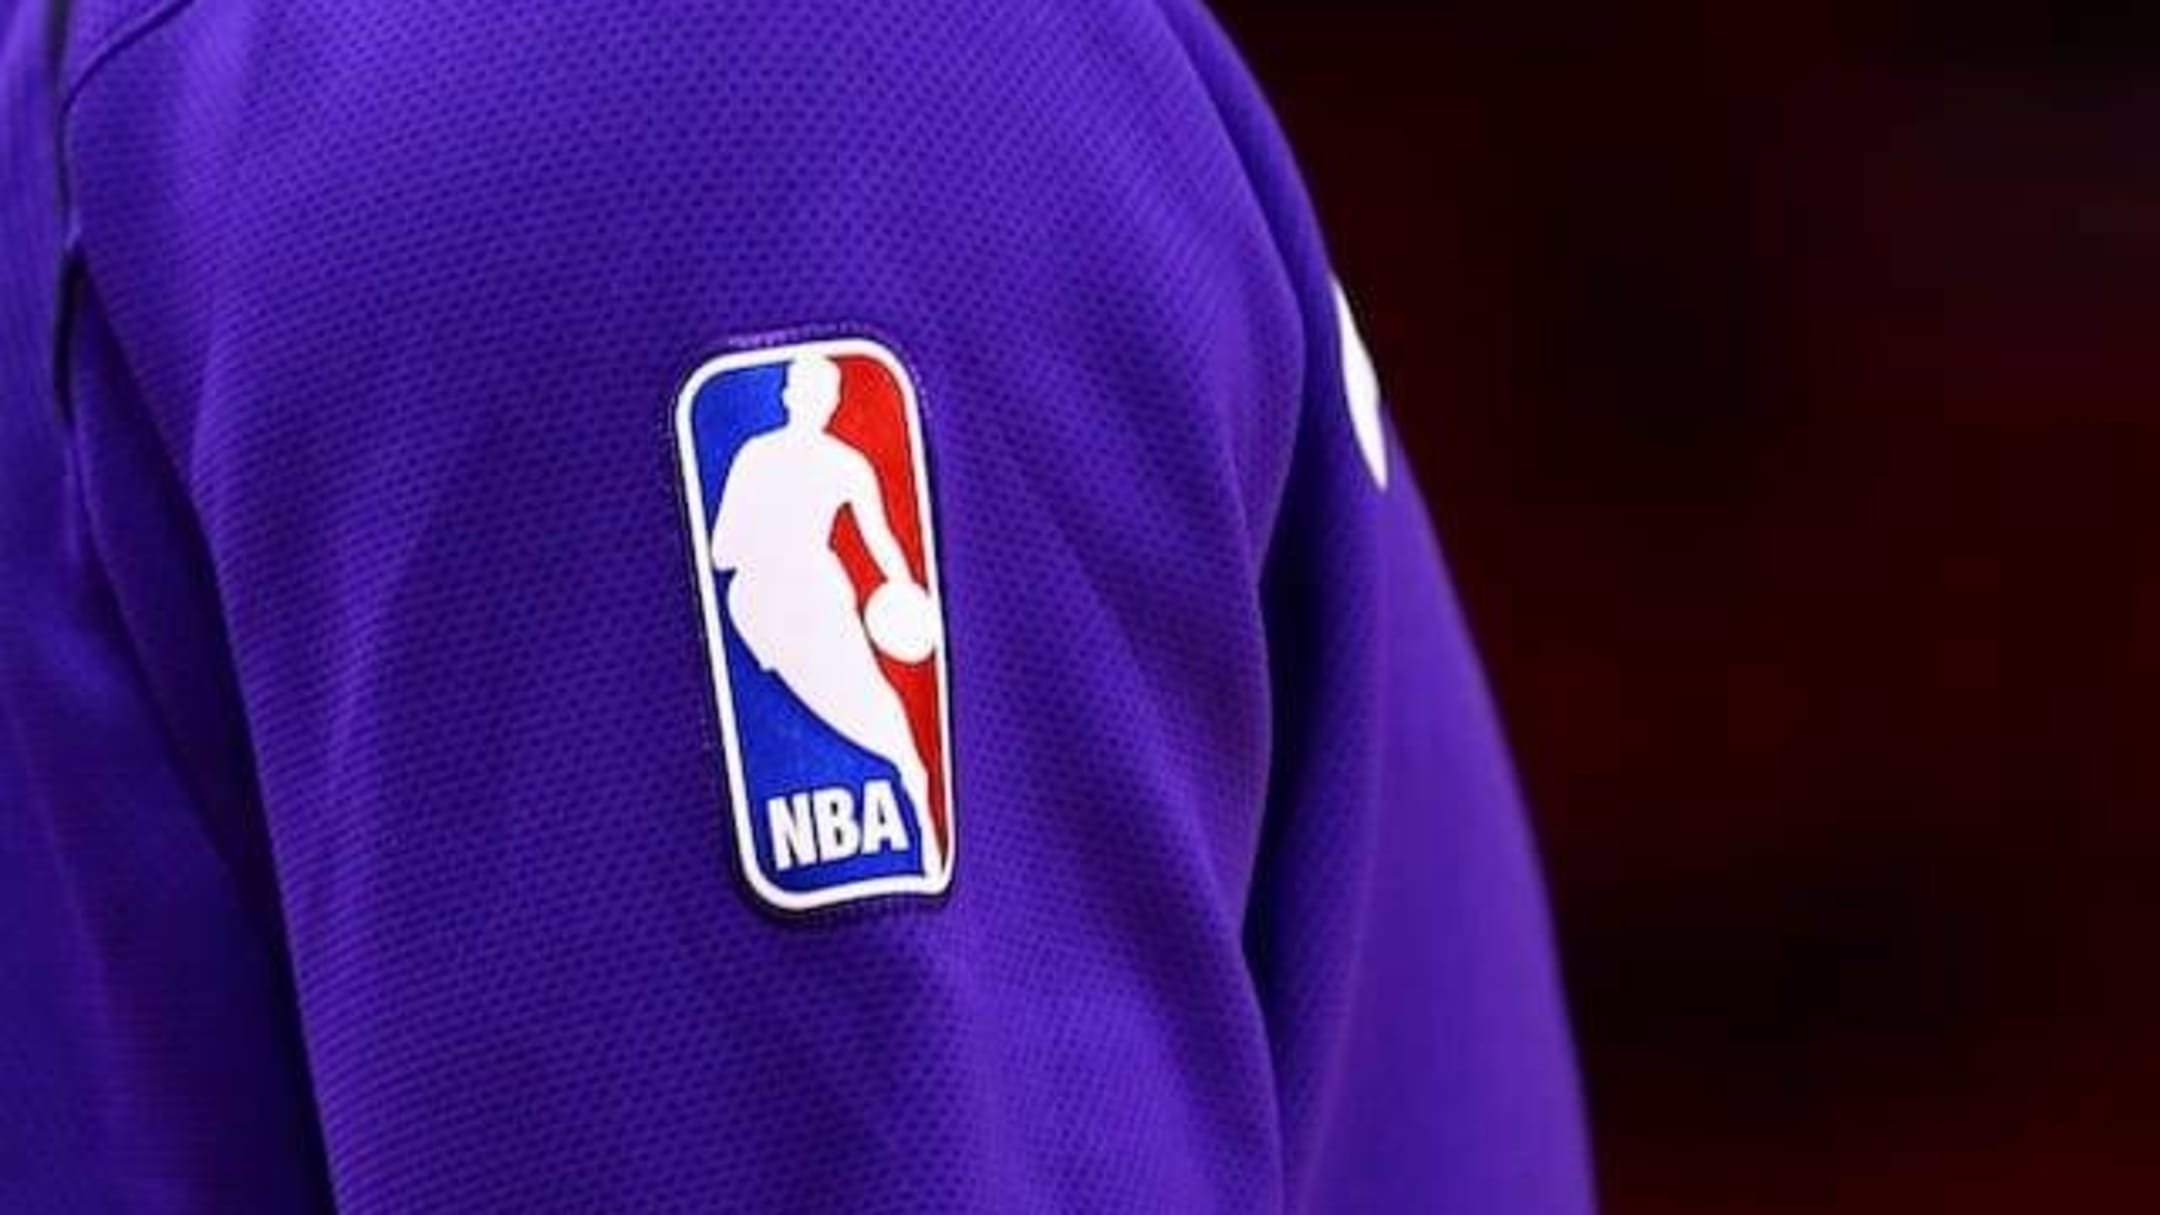 Tonight the Kings debut the 2022-23 Nike NBA City Edition Uniforms